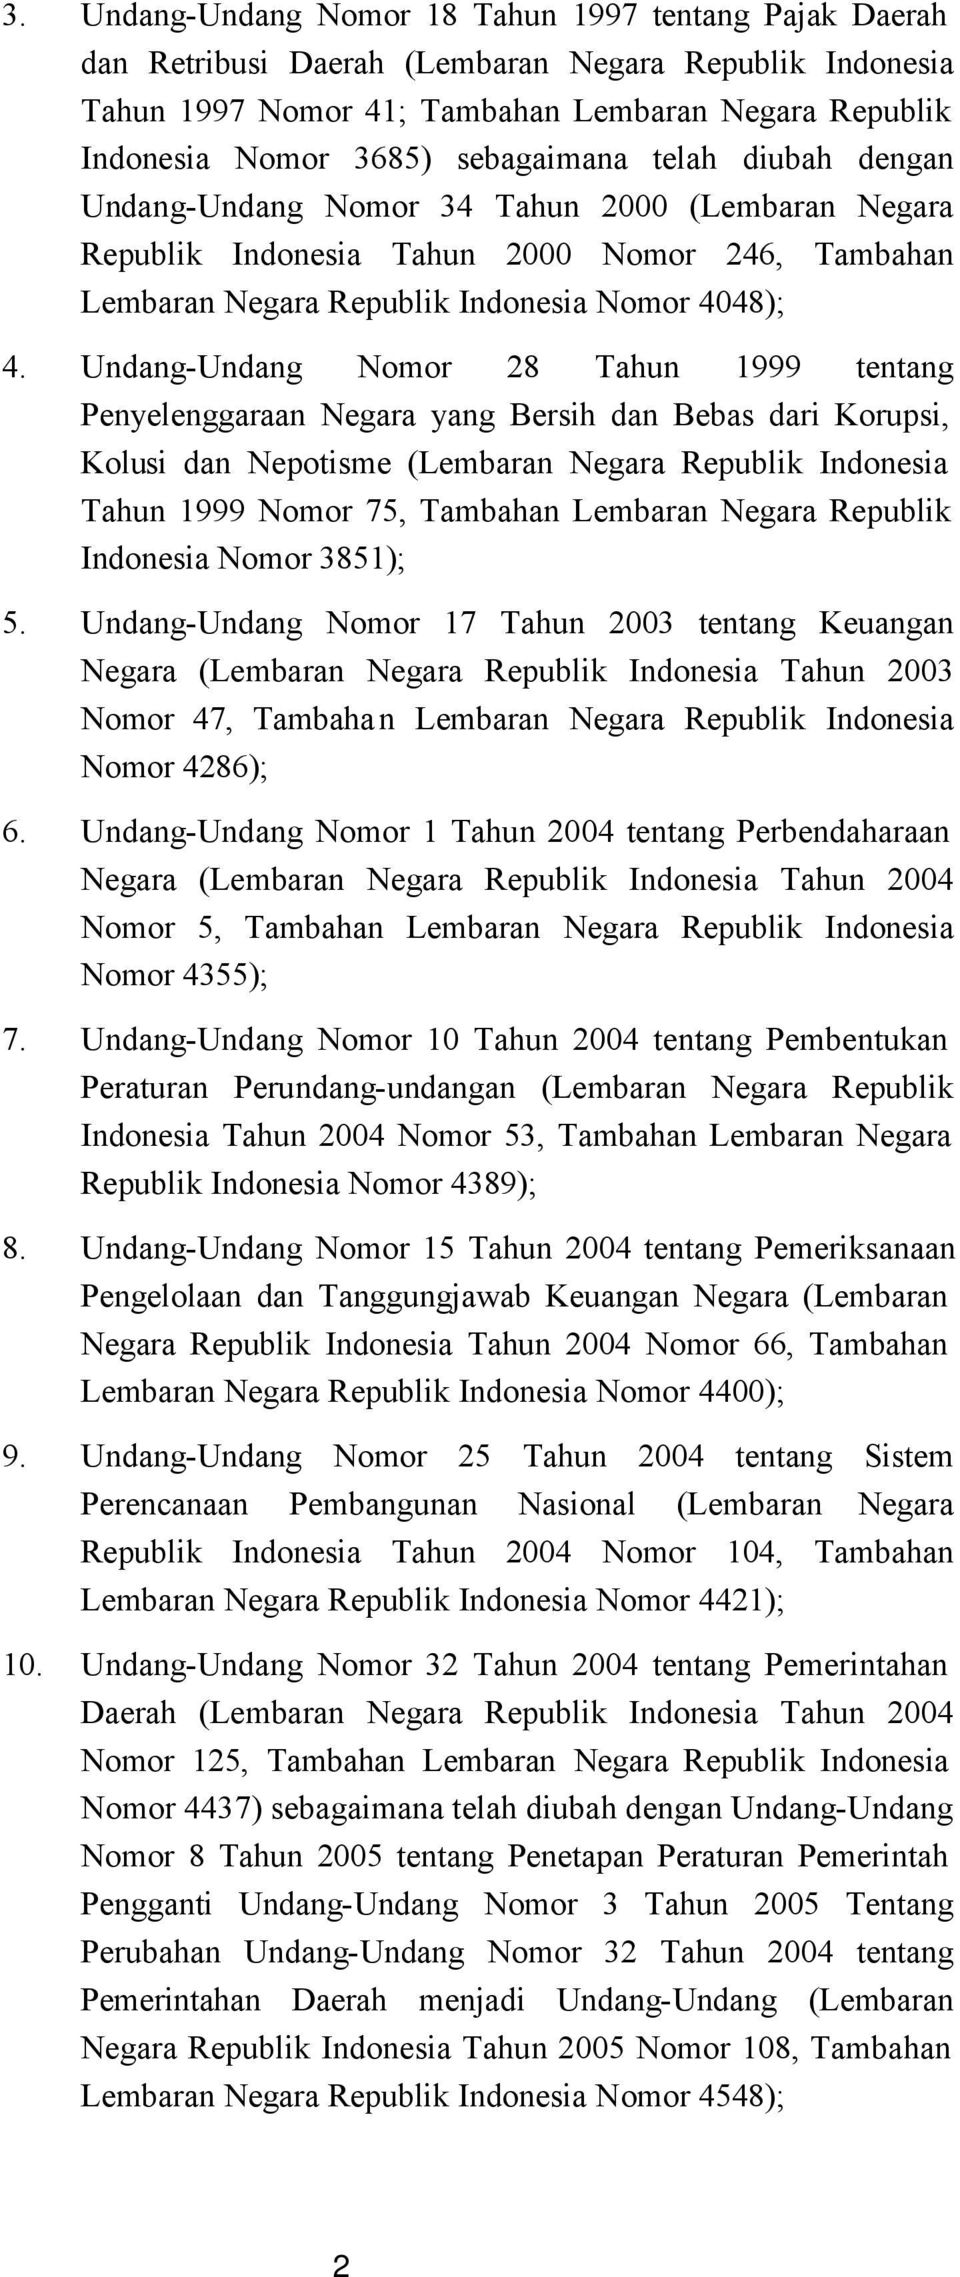 Undang-Undang Nomor 28 Tahun 1999 tentang Penyelenggaraan Negara yang Bersih dan Bebas dari Korupsi, Kolusi dan Nepotisme (Lembaran Negara Republik Indonesia Tahun 1999 Nomor 75, Tambahan Lembaran